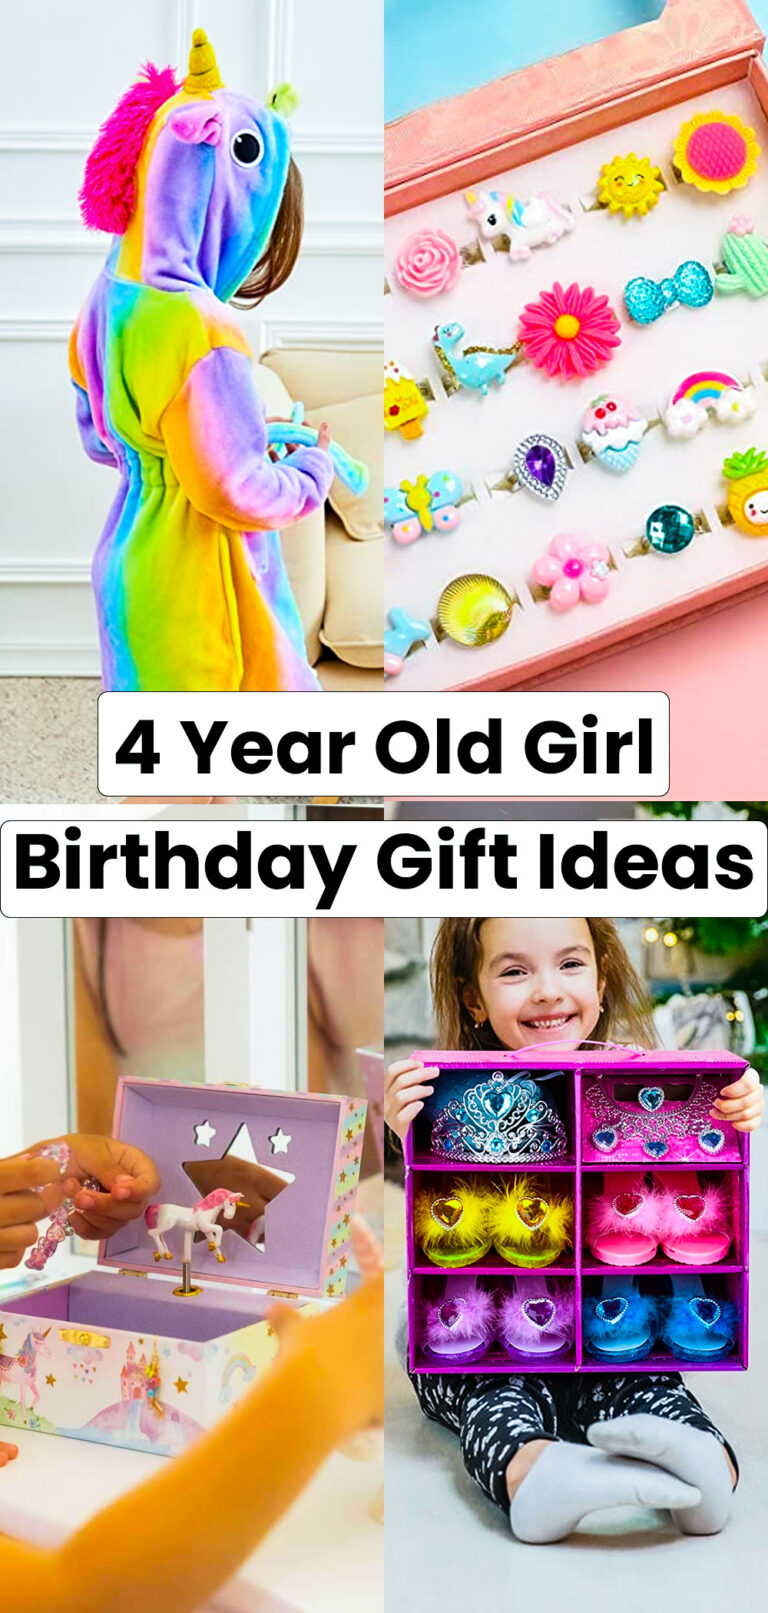 4 Year Old Girl Birthday Gift Ideas